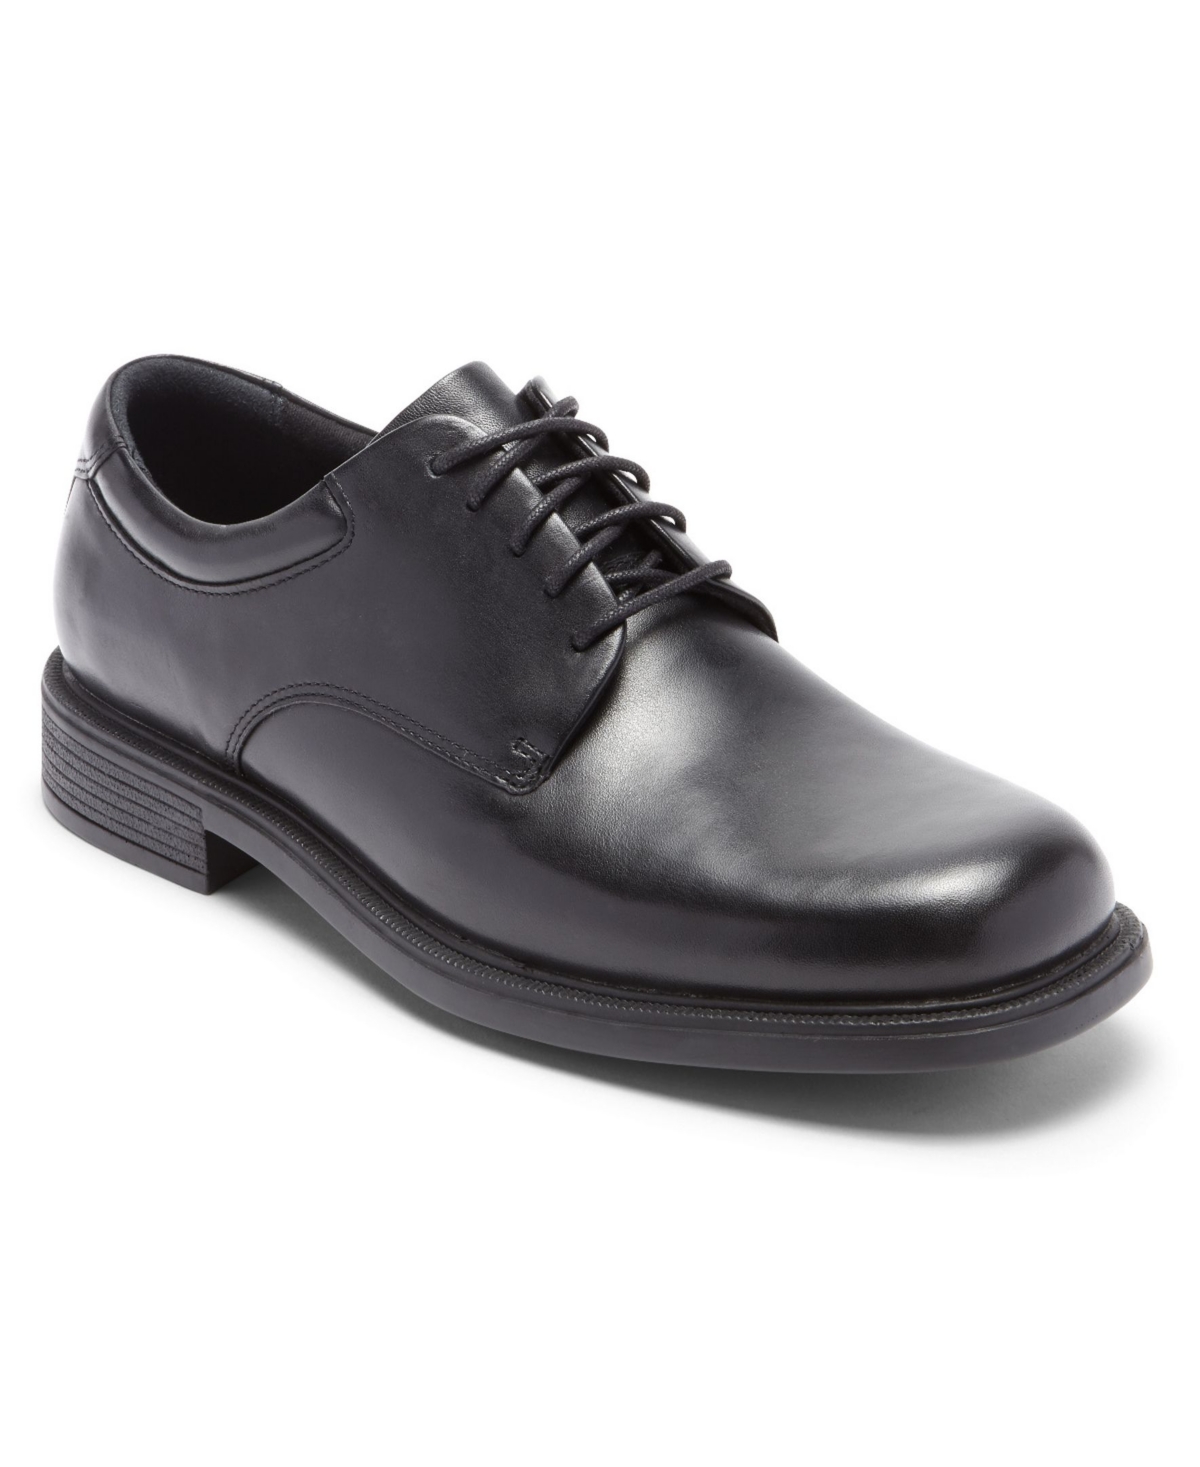 Men's Margin Casual Shoes - Black